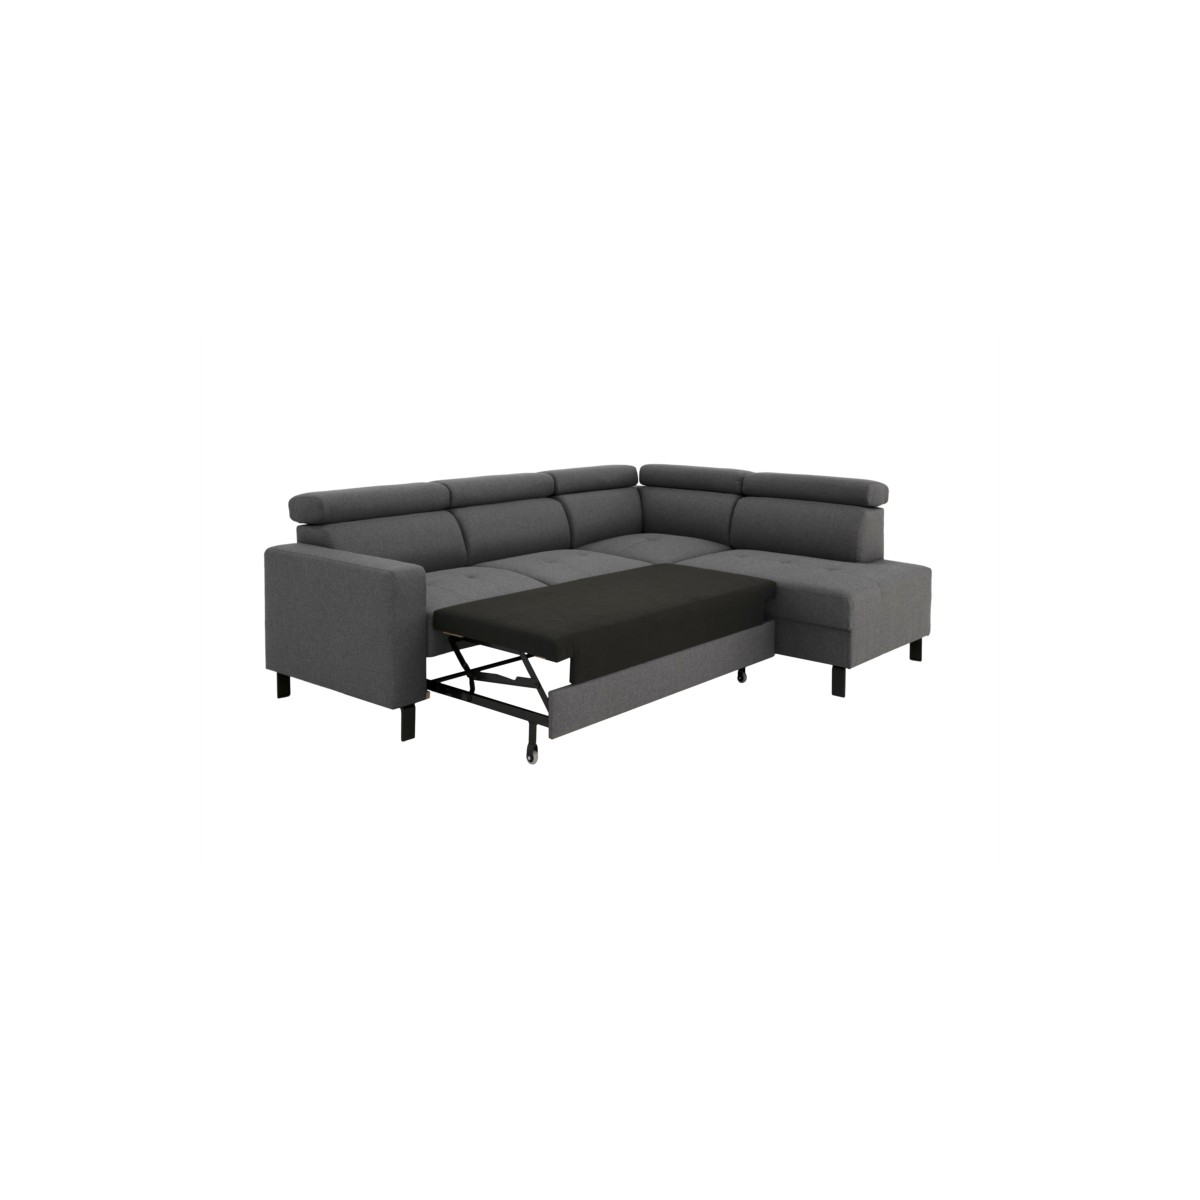 reposacabezas ajustable de sofá de cuero 8708 brazo ajustable con  reposacabezas - sofá de la esquina - Shenzhen PG siglo muebles Co., Ltd